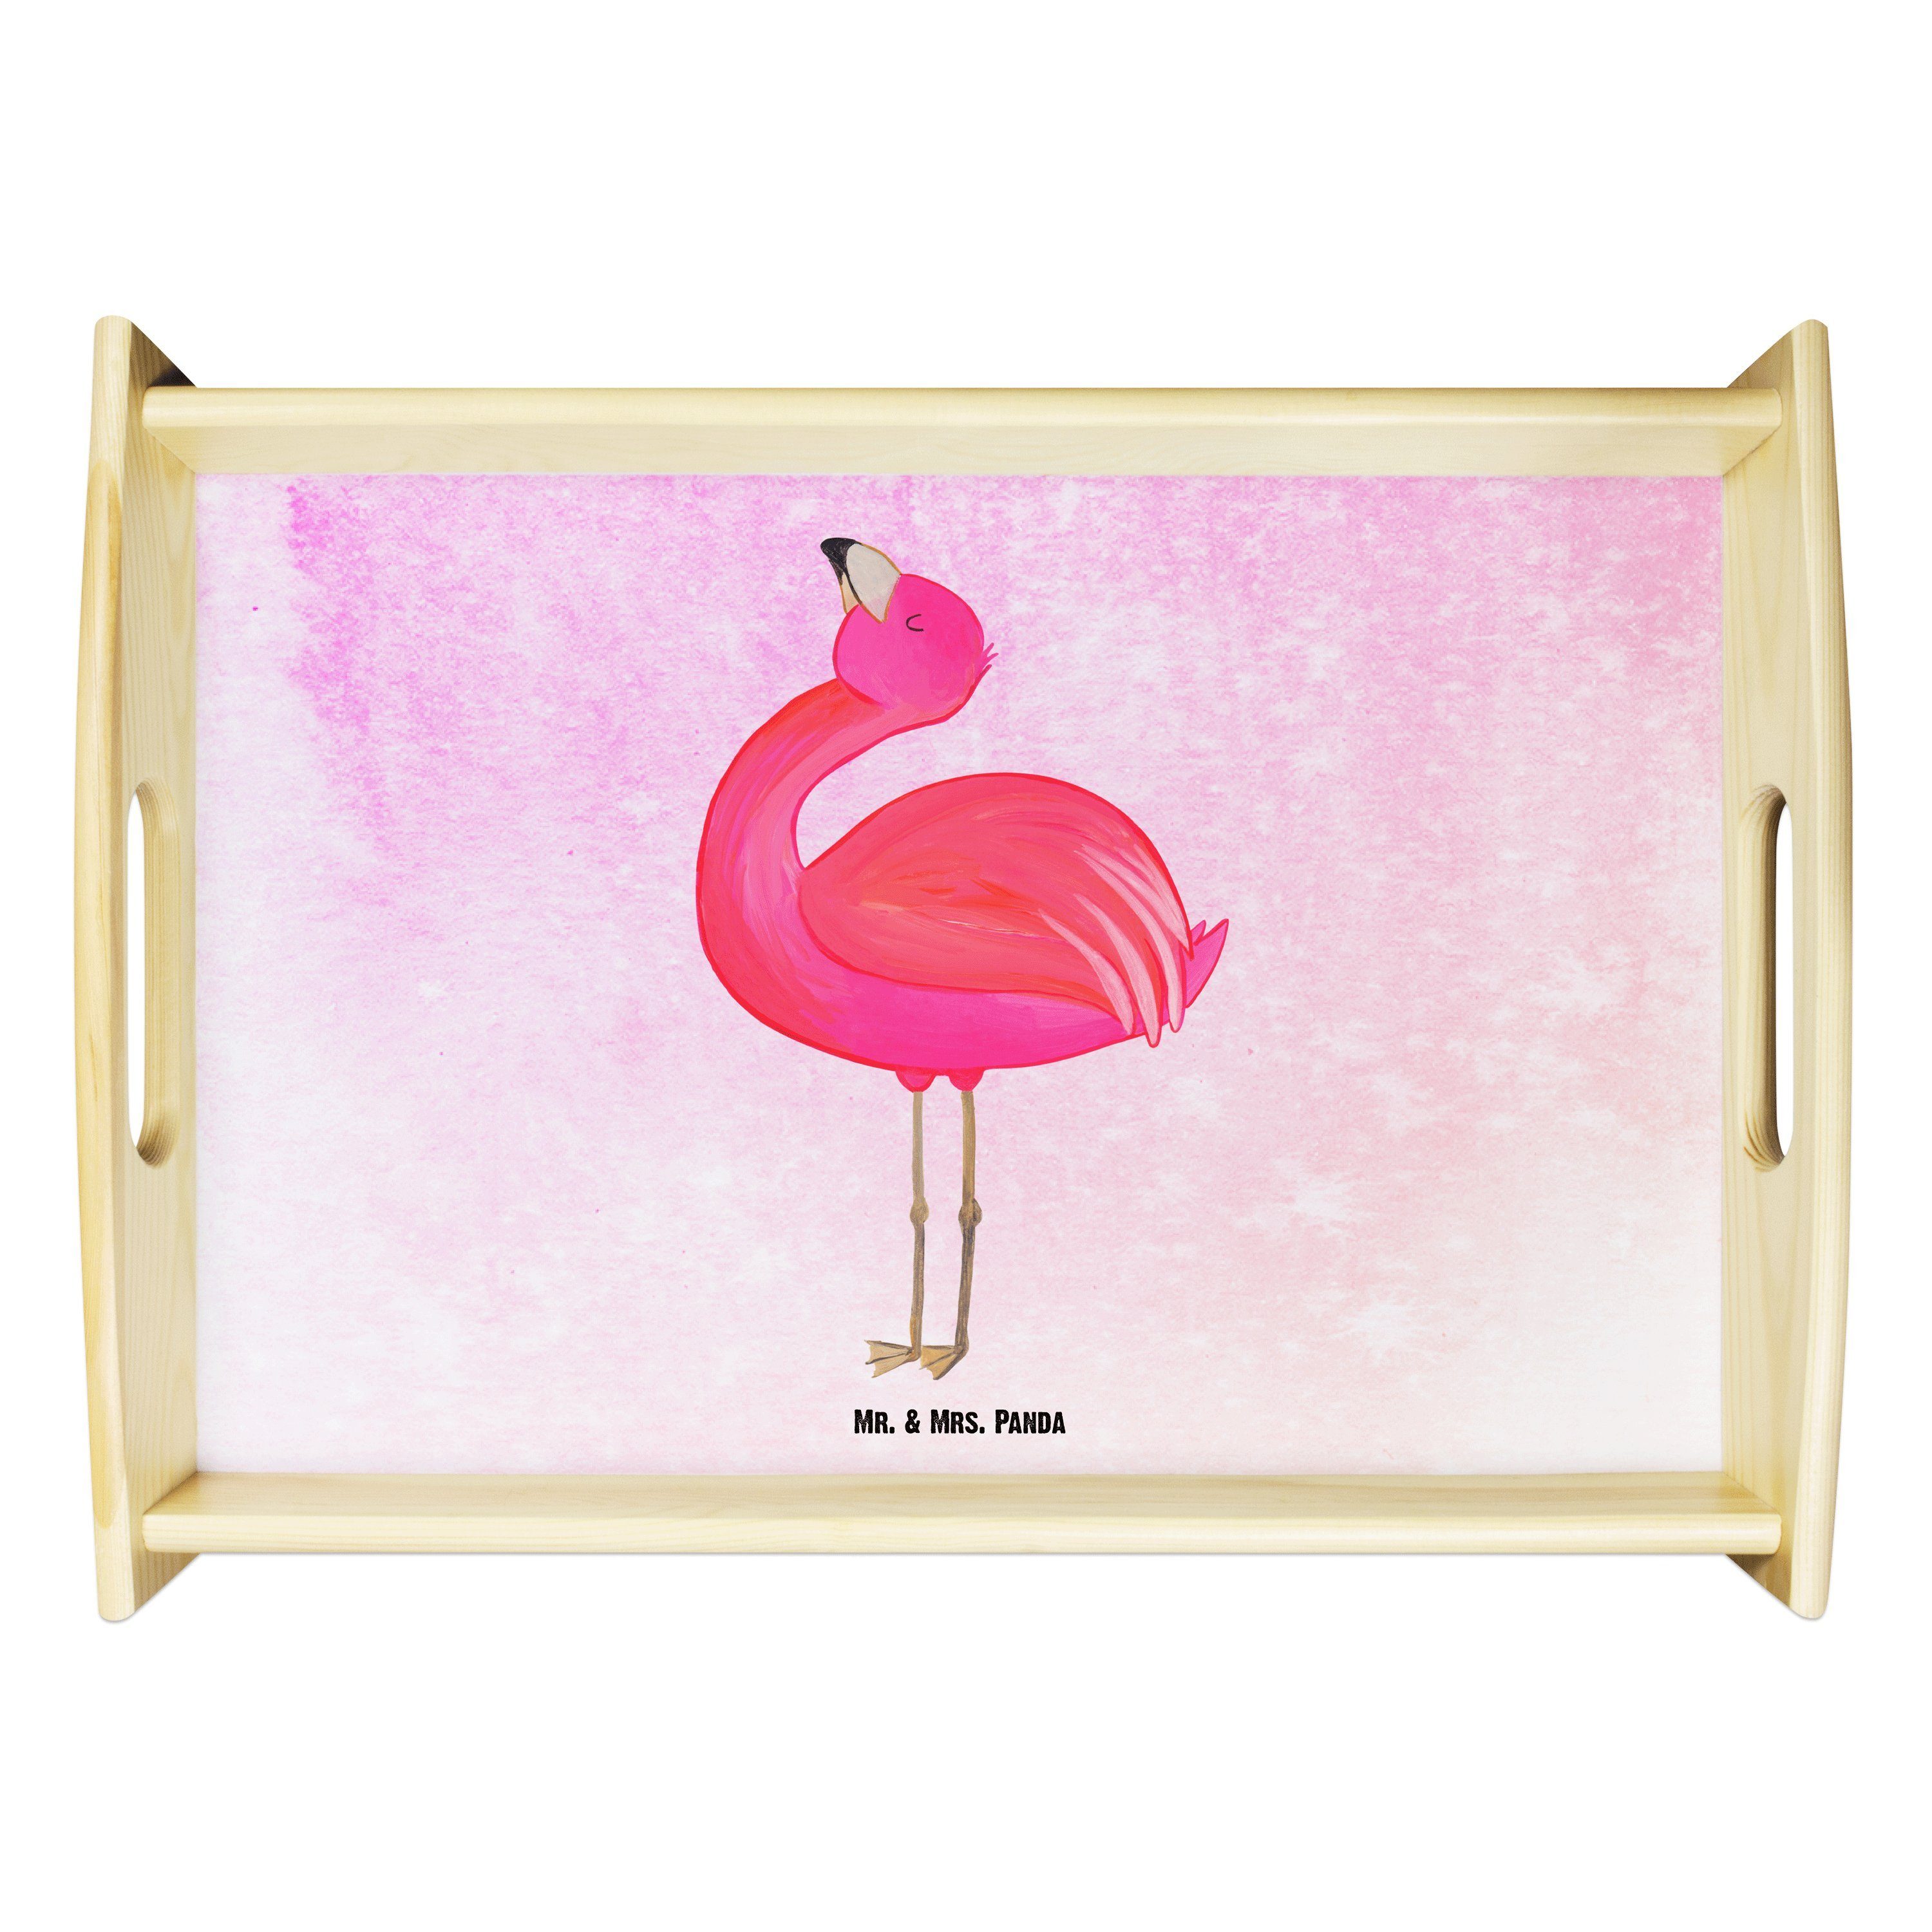 Mr. & Mrs. Panda Tablett Flamingo stolz - Aquarell Pink - Geschenk, glücklich, Küchentablett, Echtholz lasiert, (1-tlg)